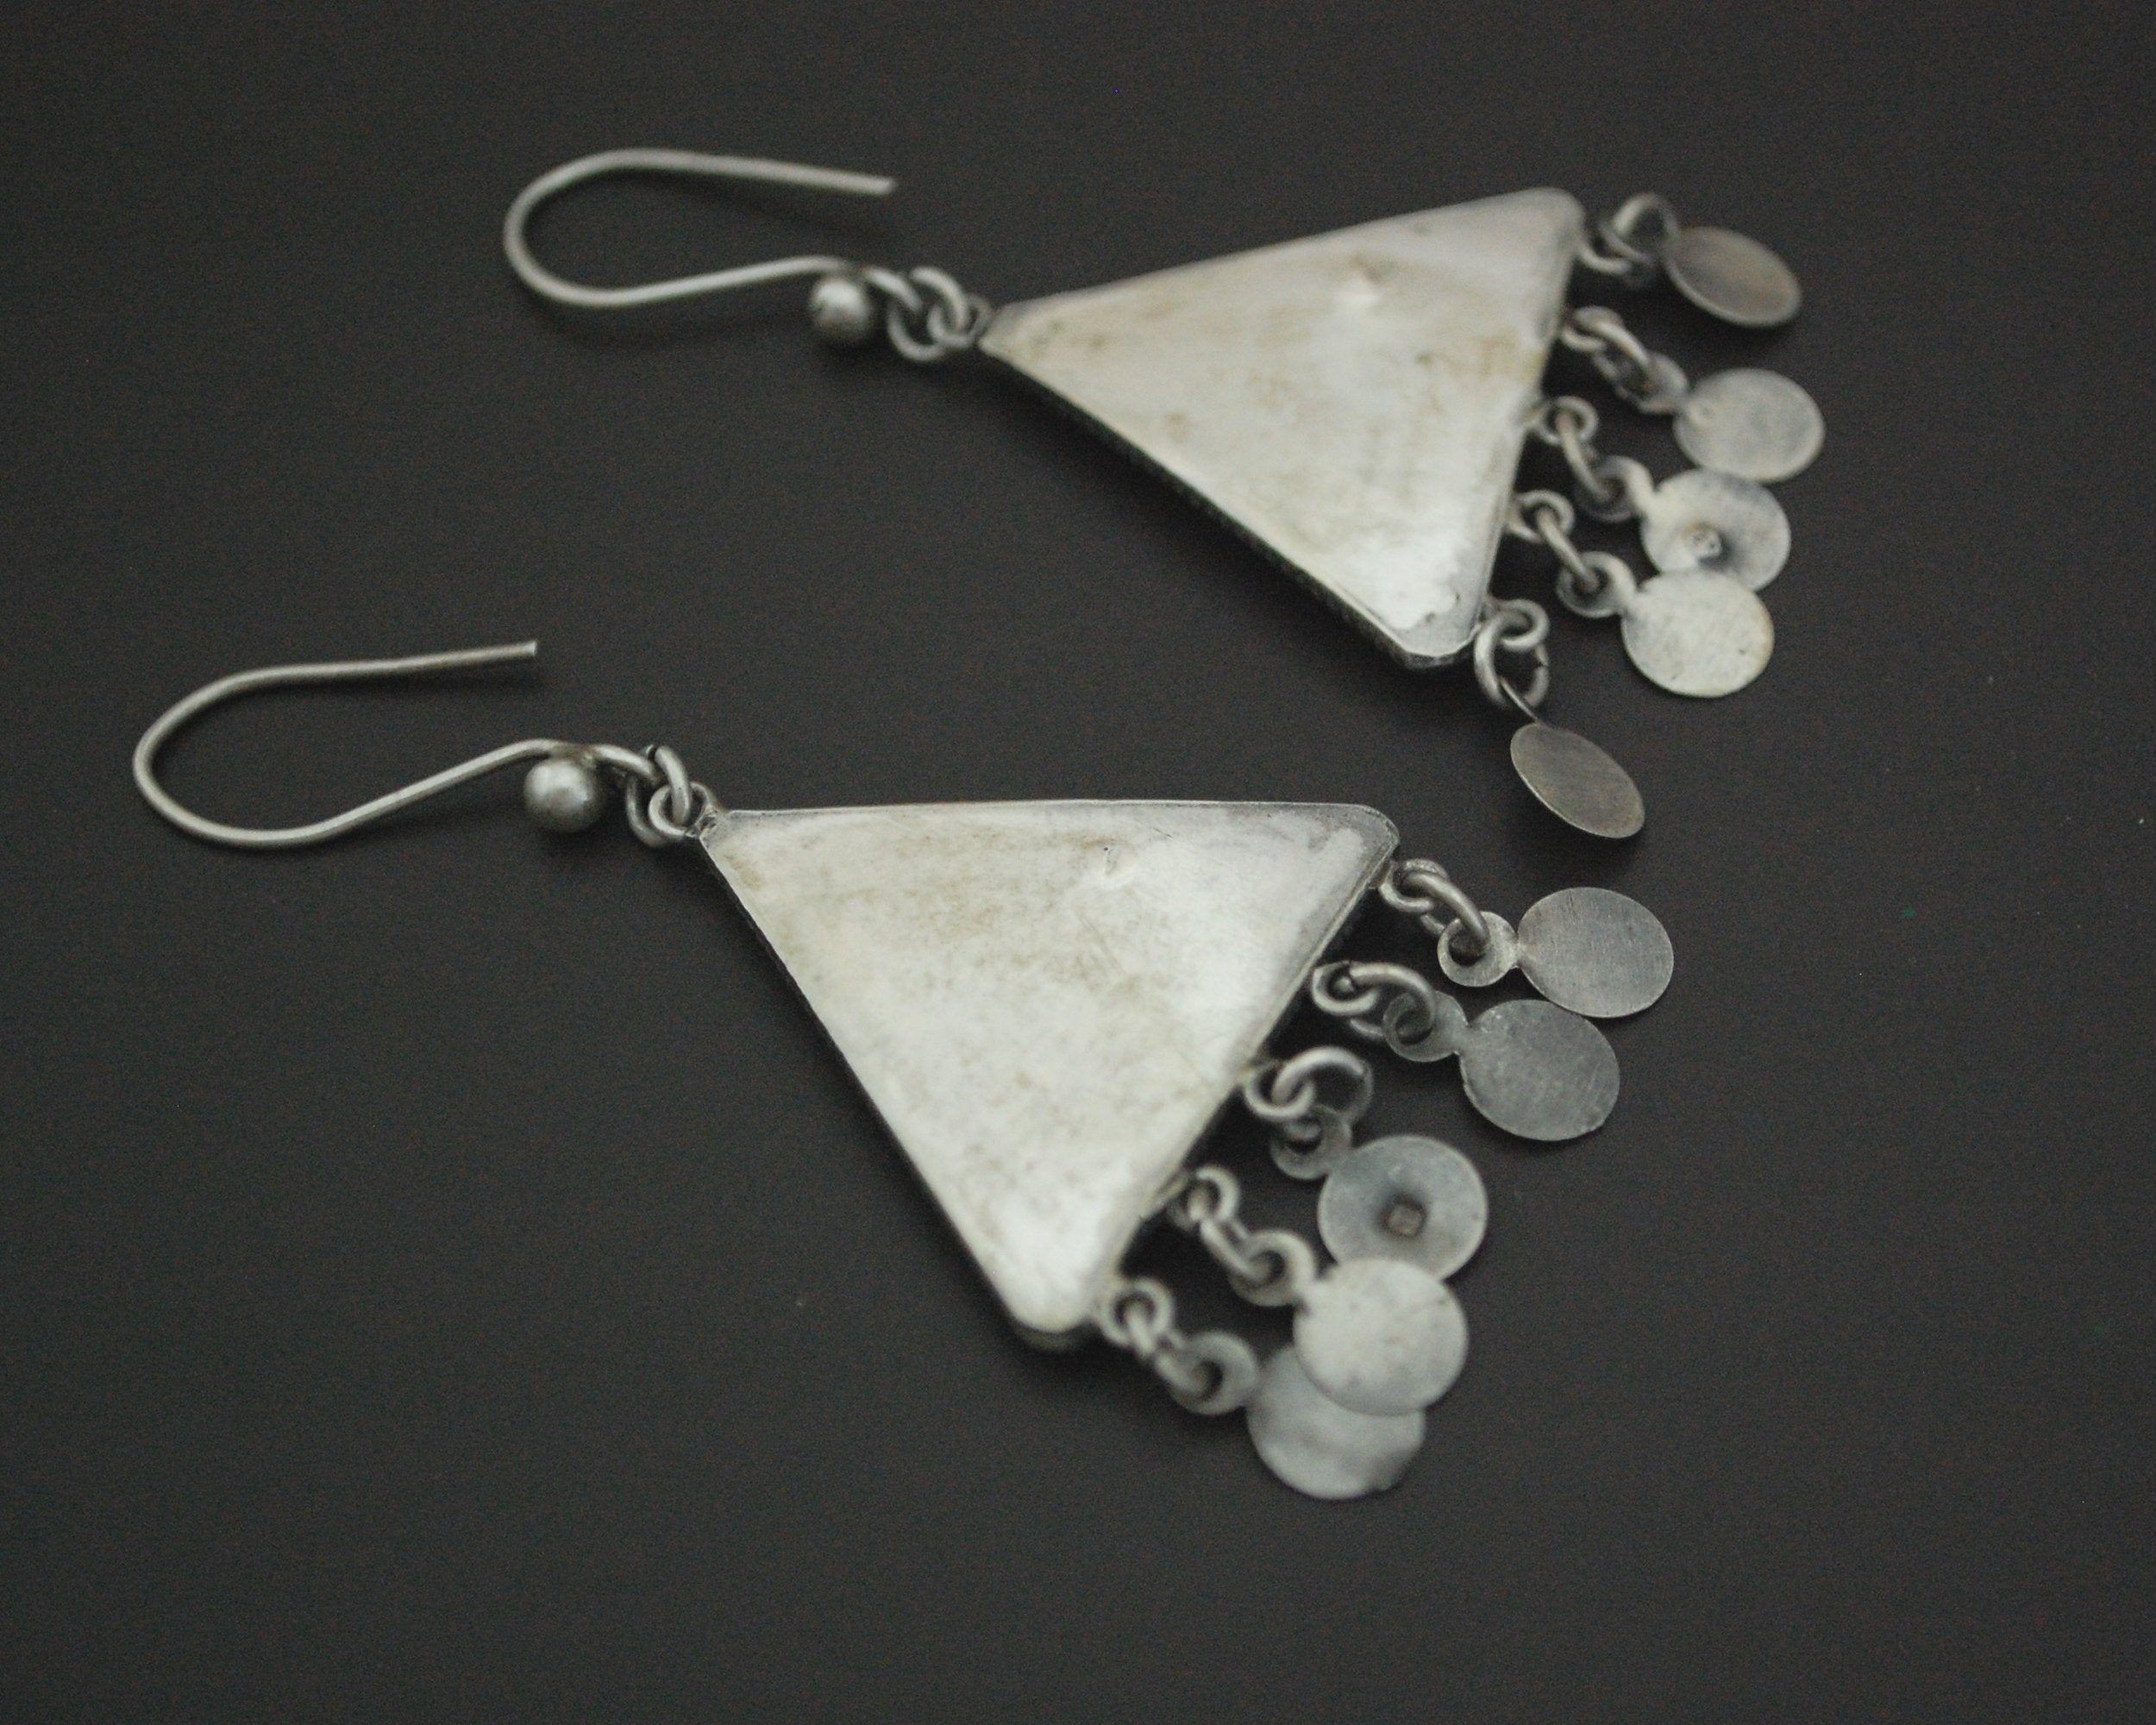 Ethnic Silver Dangle Earrings from Egypt